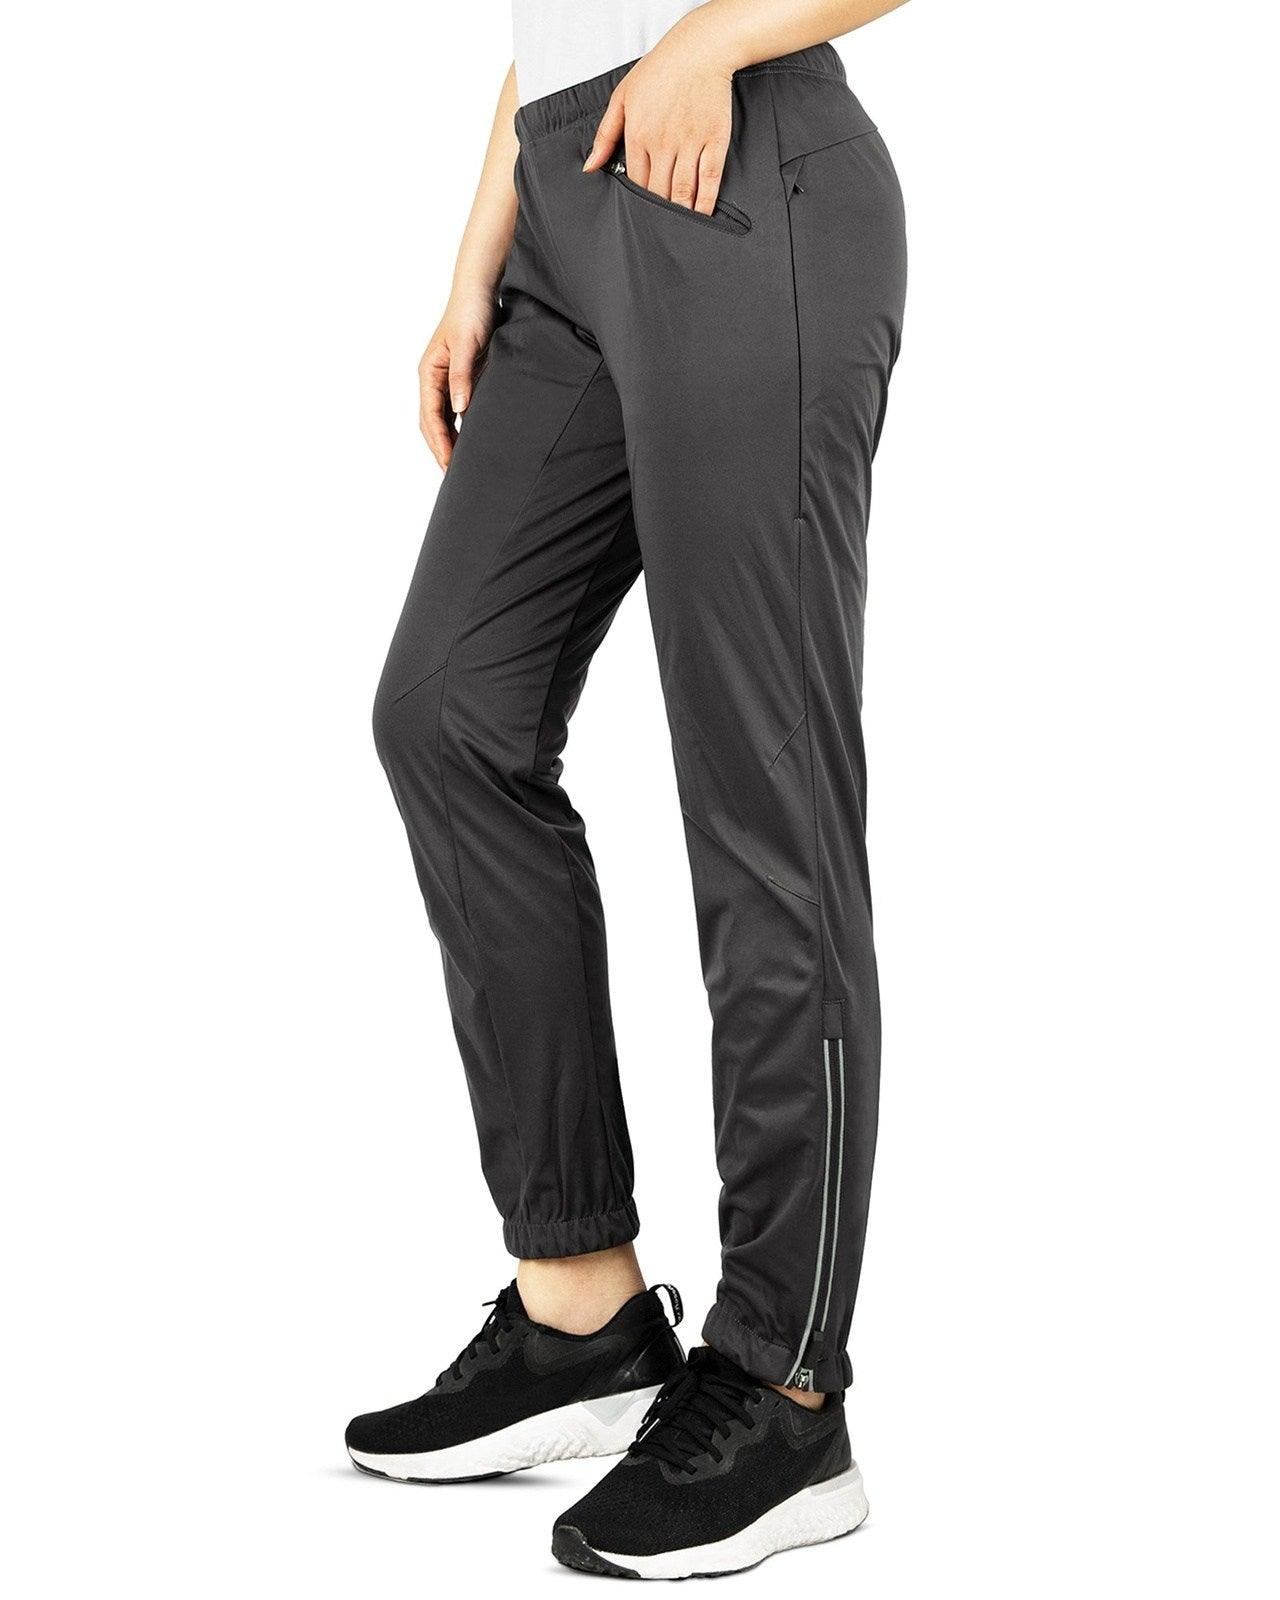 Tangerine high rise legging pants womens large black athletic rear zipper  pocket